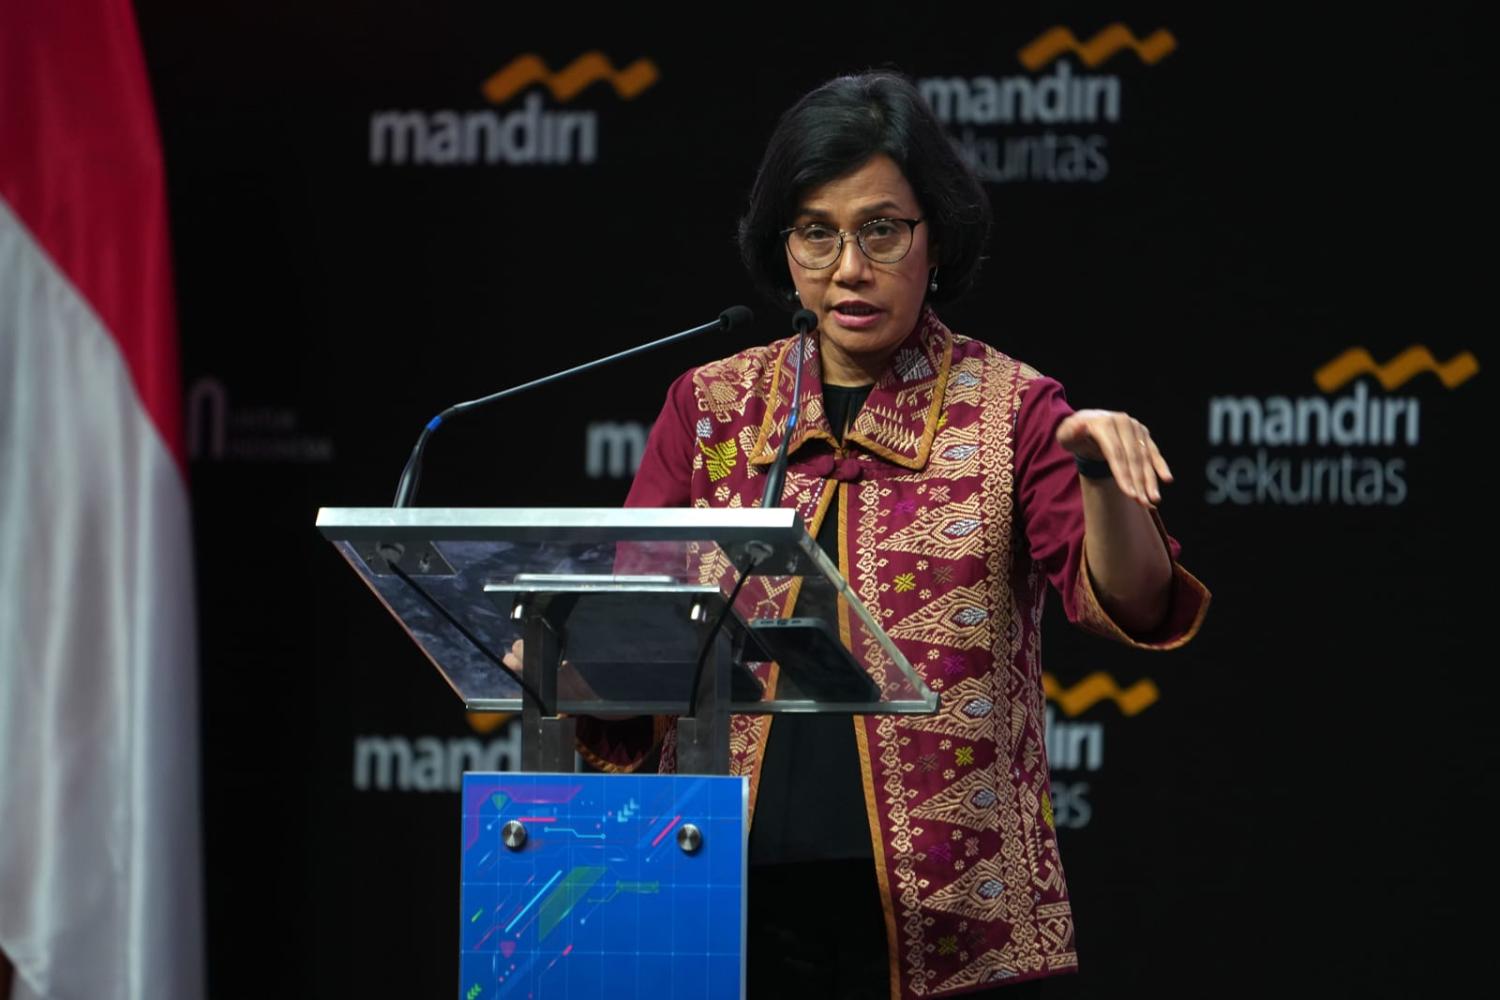 Sri Mulyani Indrawati, Indonesia's finance minister, speaks last month during the Mandiri Investment Forum in Jakarta, Indonesia (Dimas Ardian/Bloomberg via Getty Images)